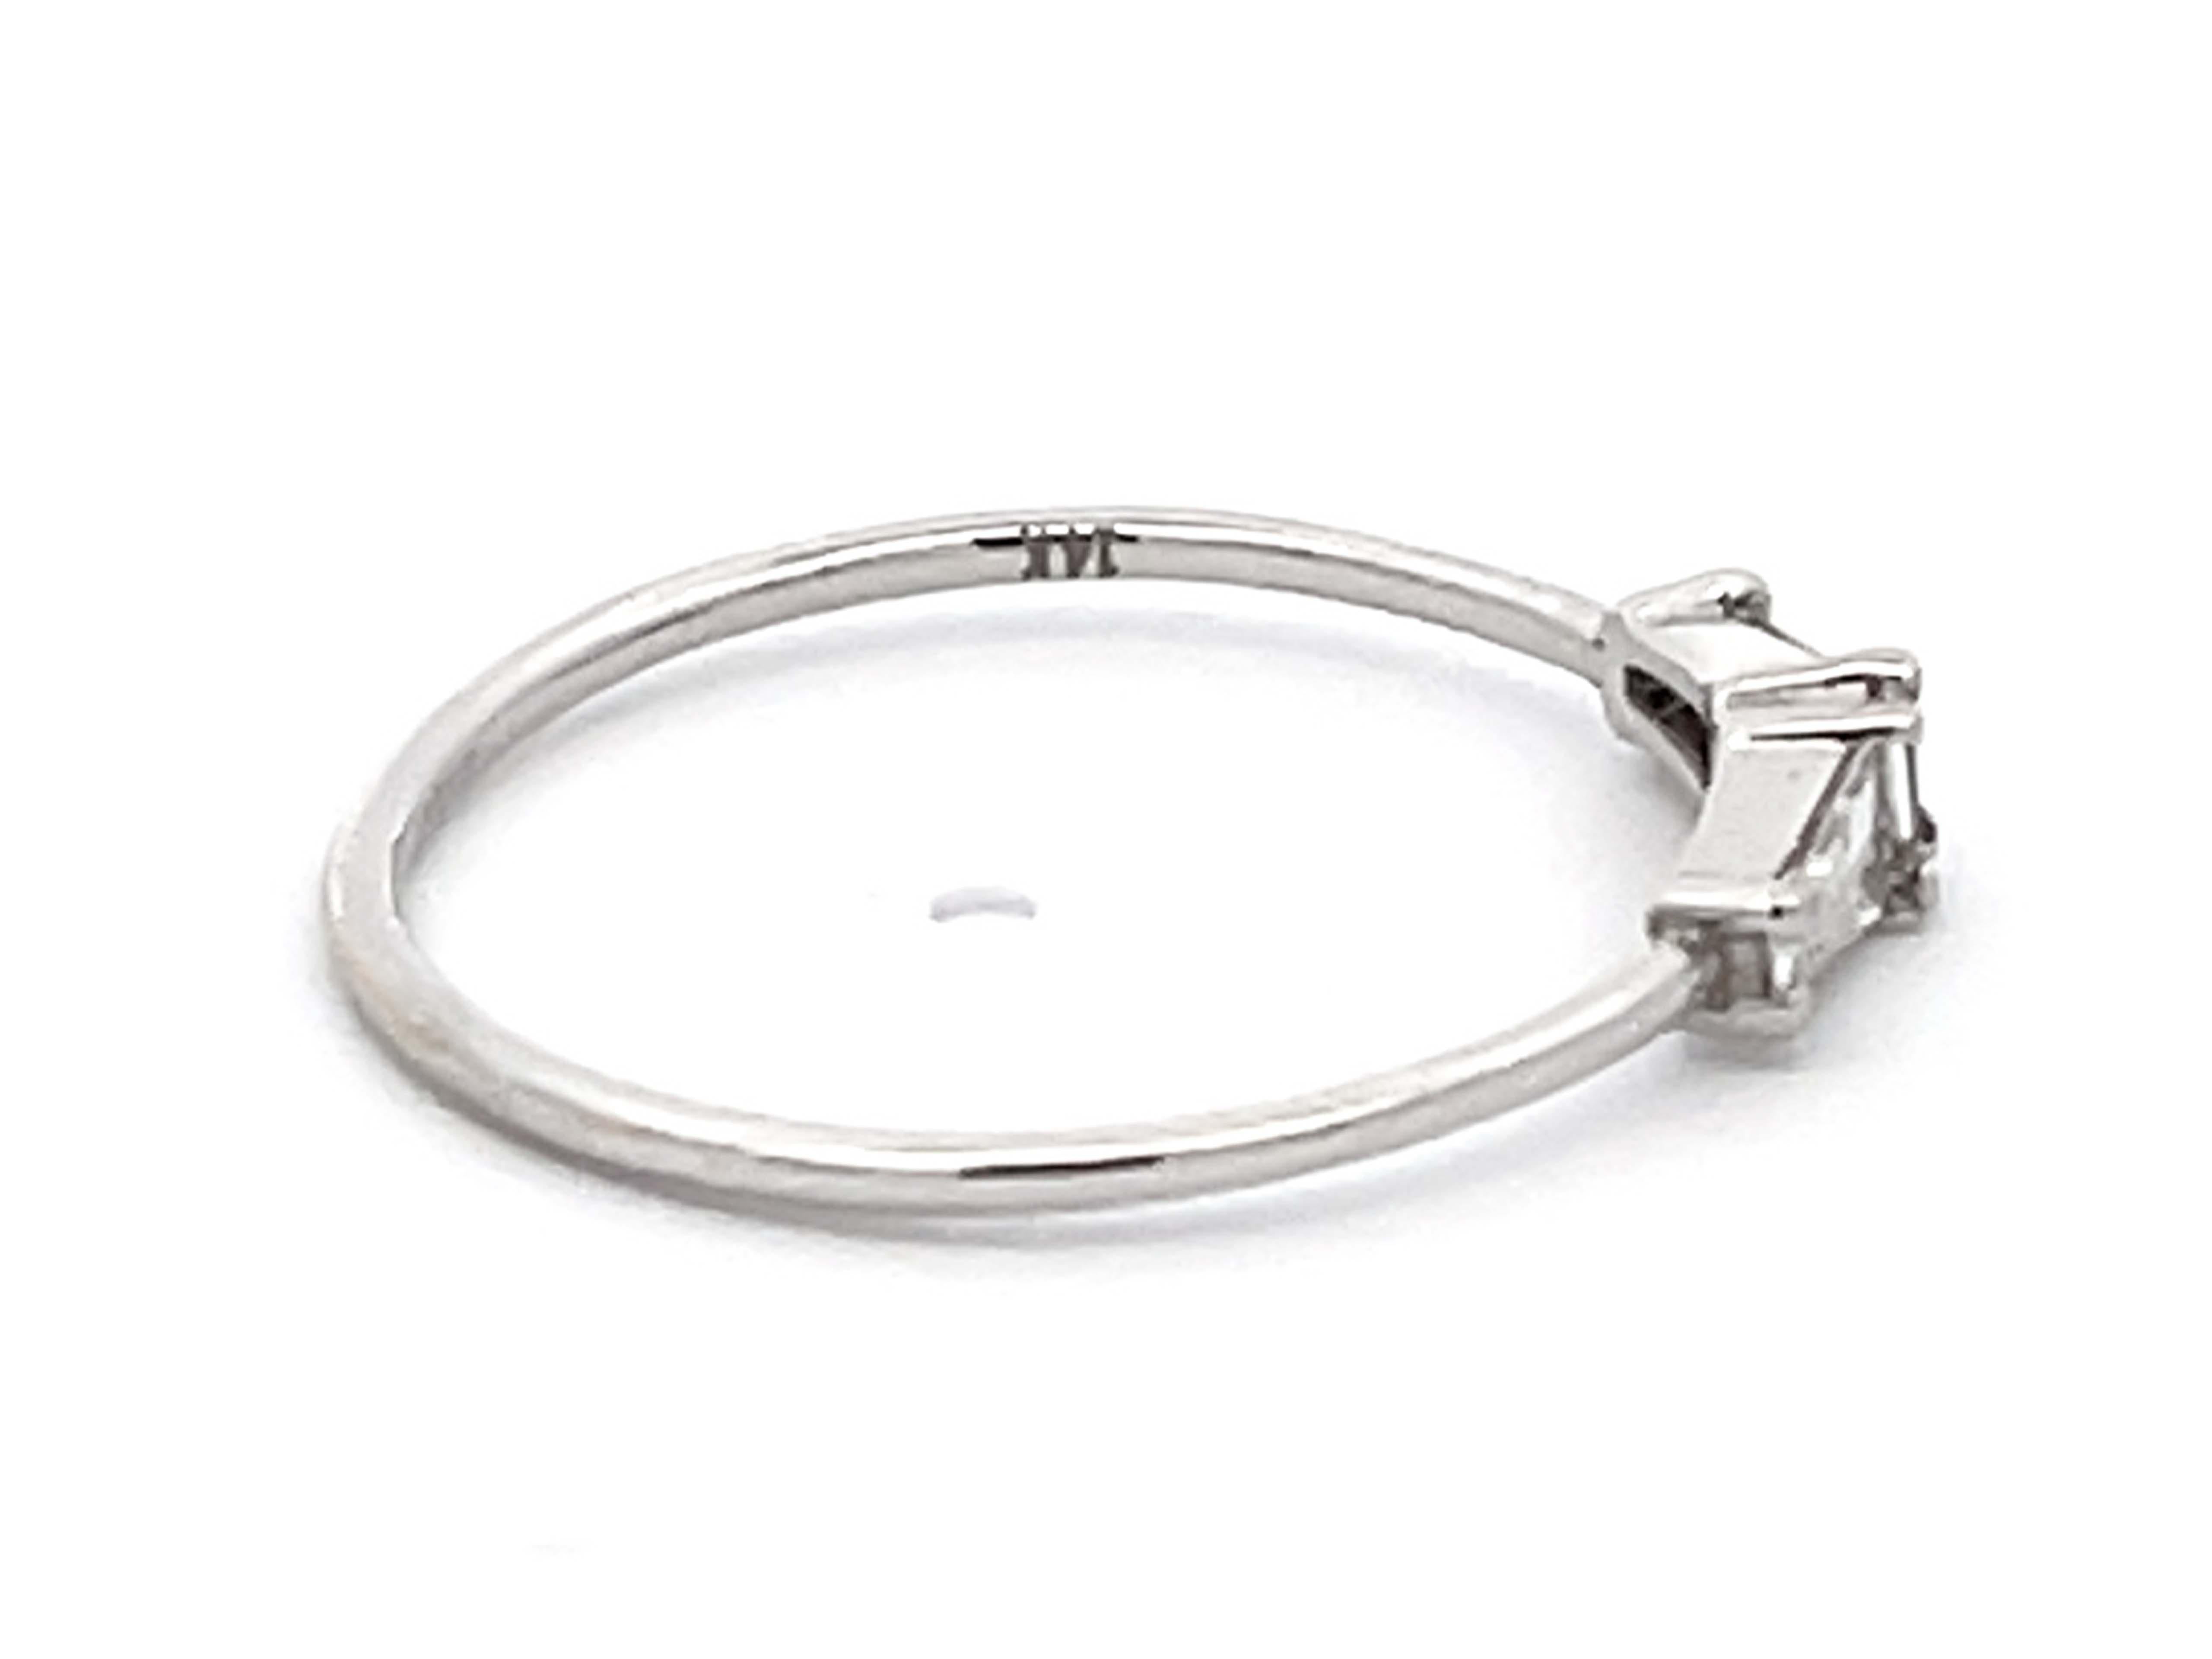 Women's or Men's Three Baguette Diamond Thin Band Ring in 14k White Gold